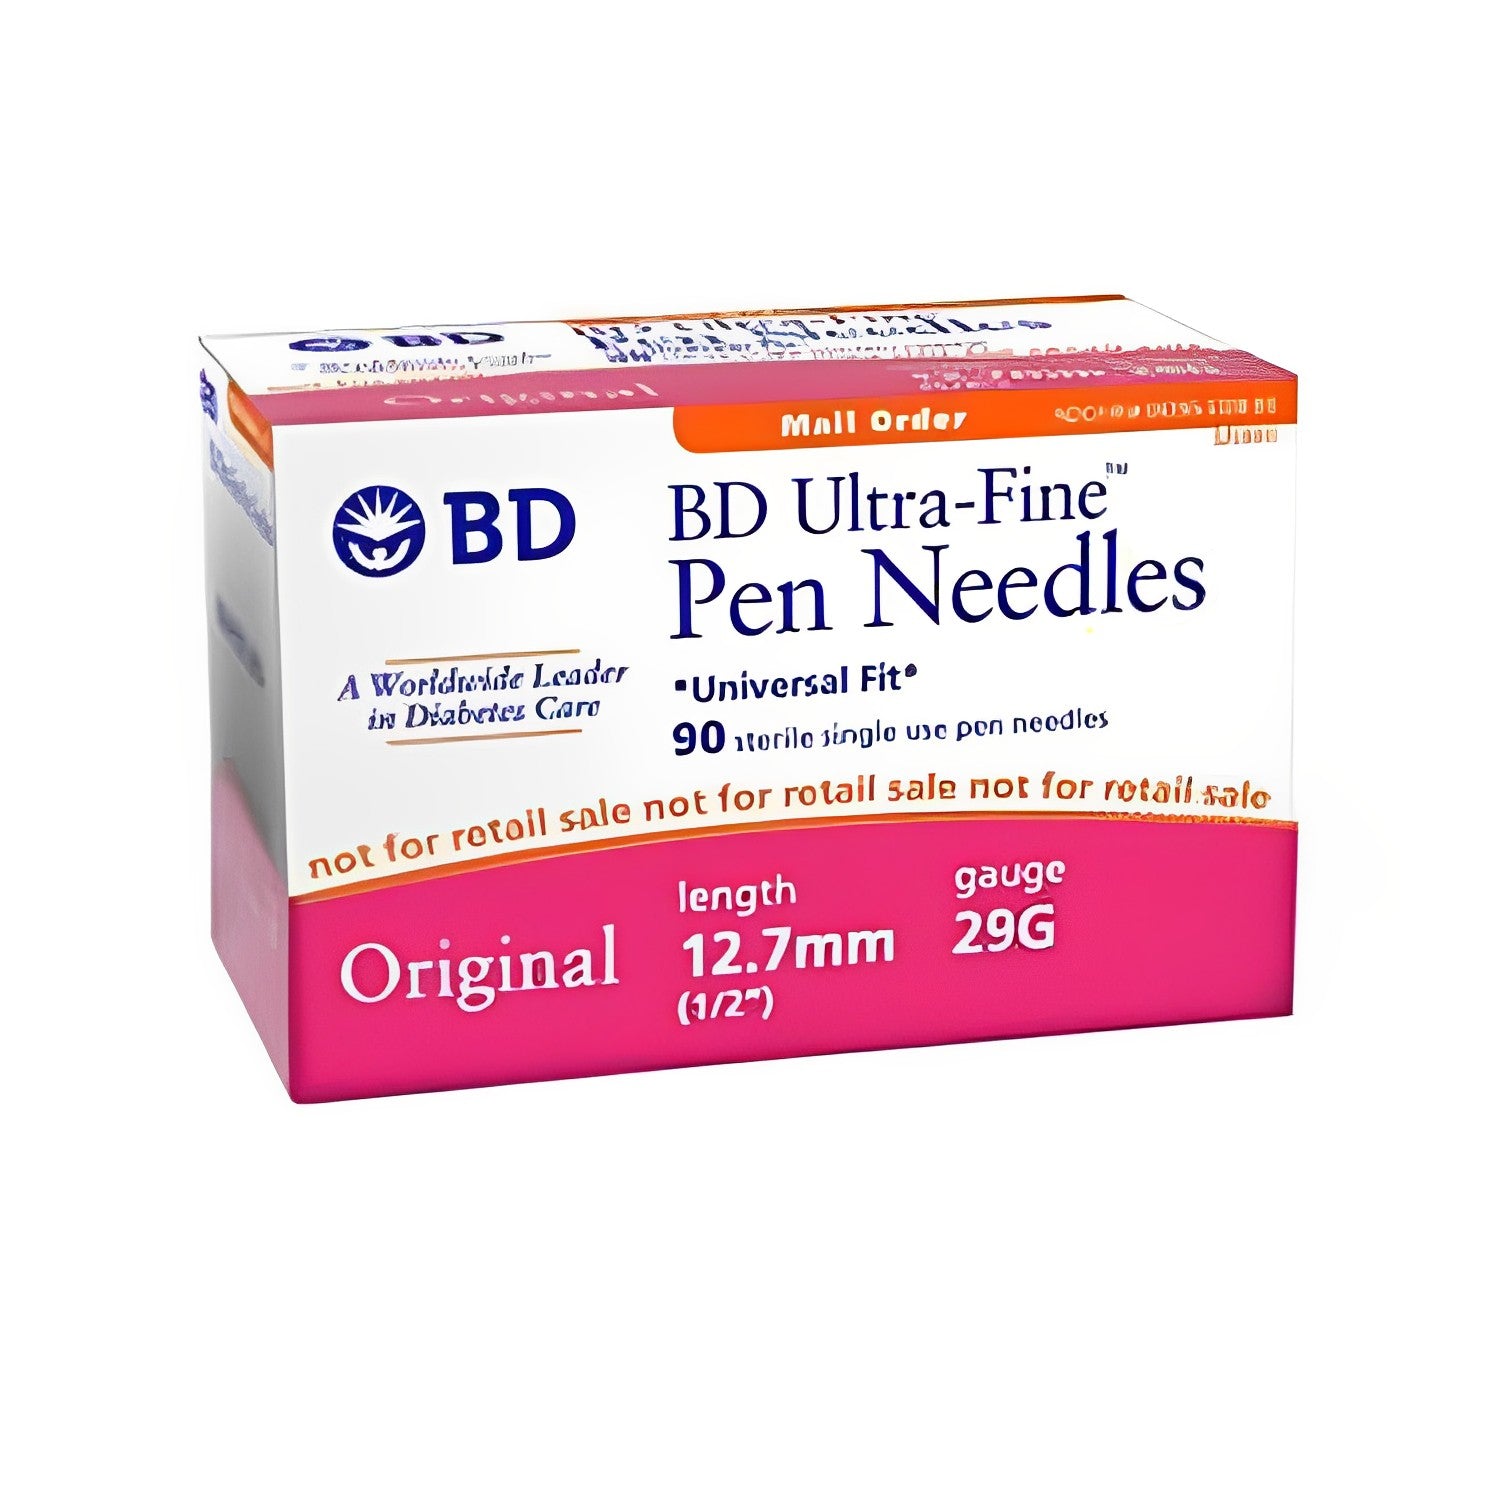 BD Ultra-Fine 31G (0.25mm) 3/16in (5mm) U100 Mini Pen Needles– Medicinal  Supplies